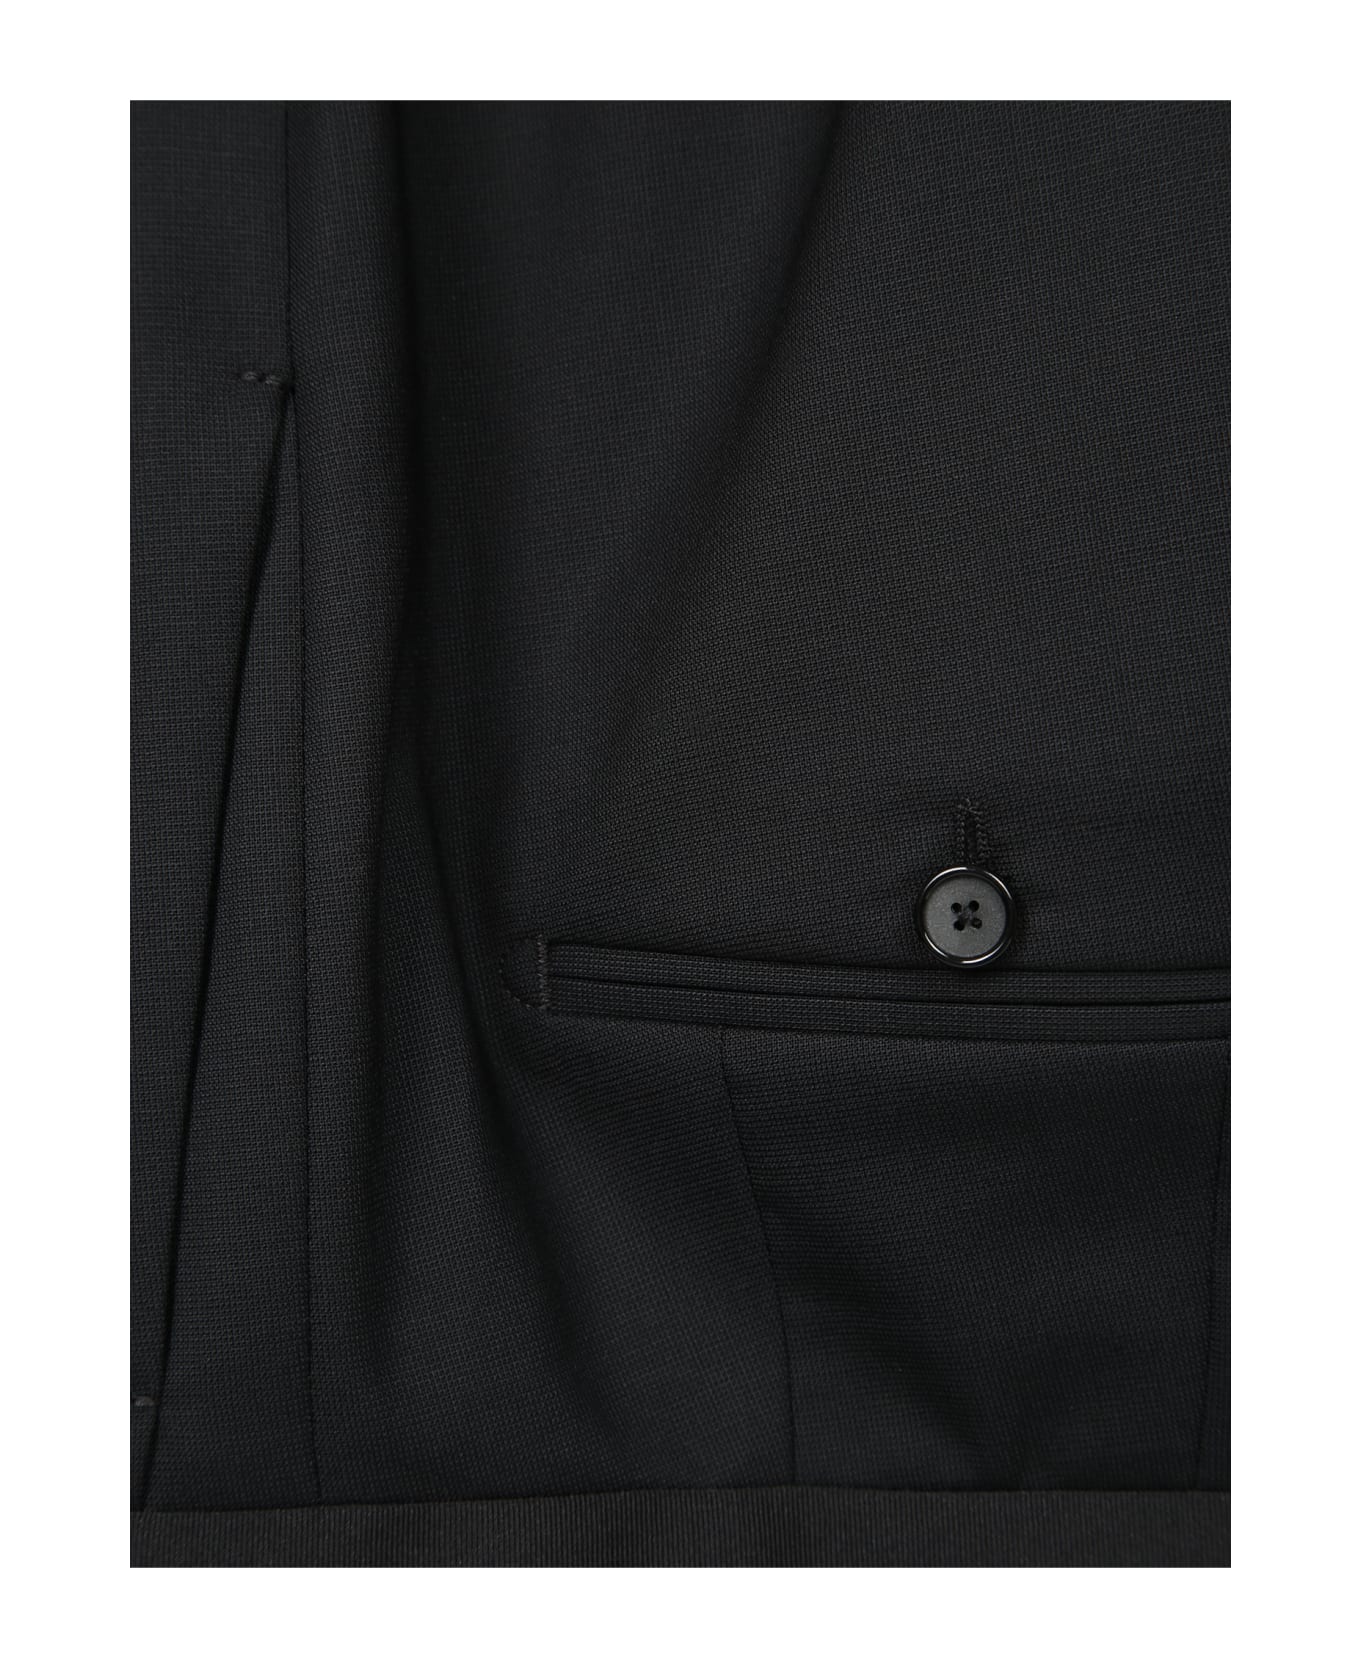 Tagliatore Three-piece Dinner Suit - Black